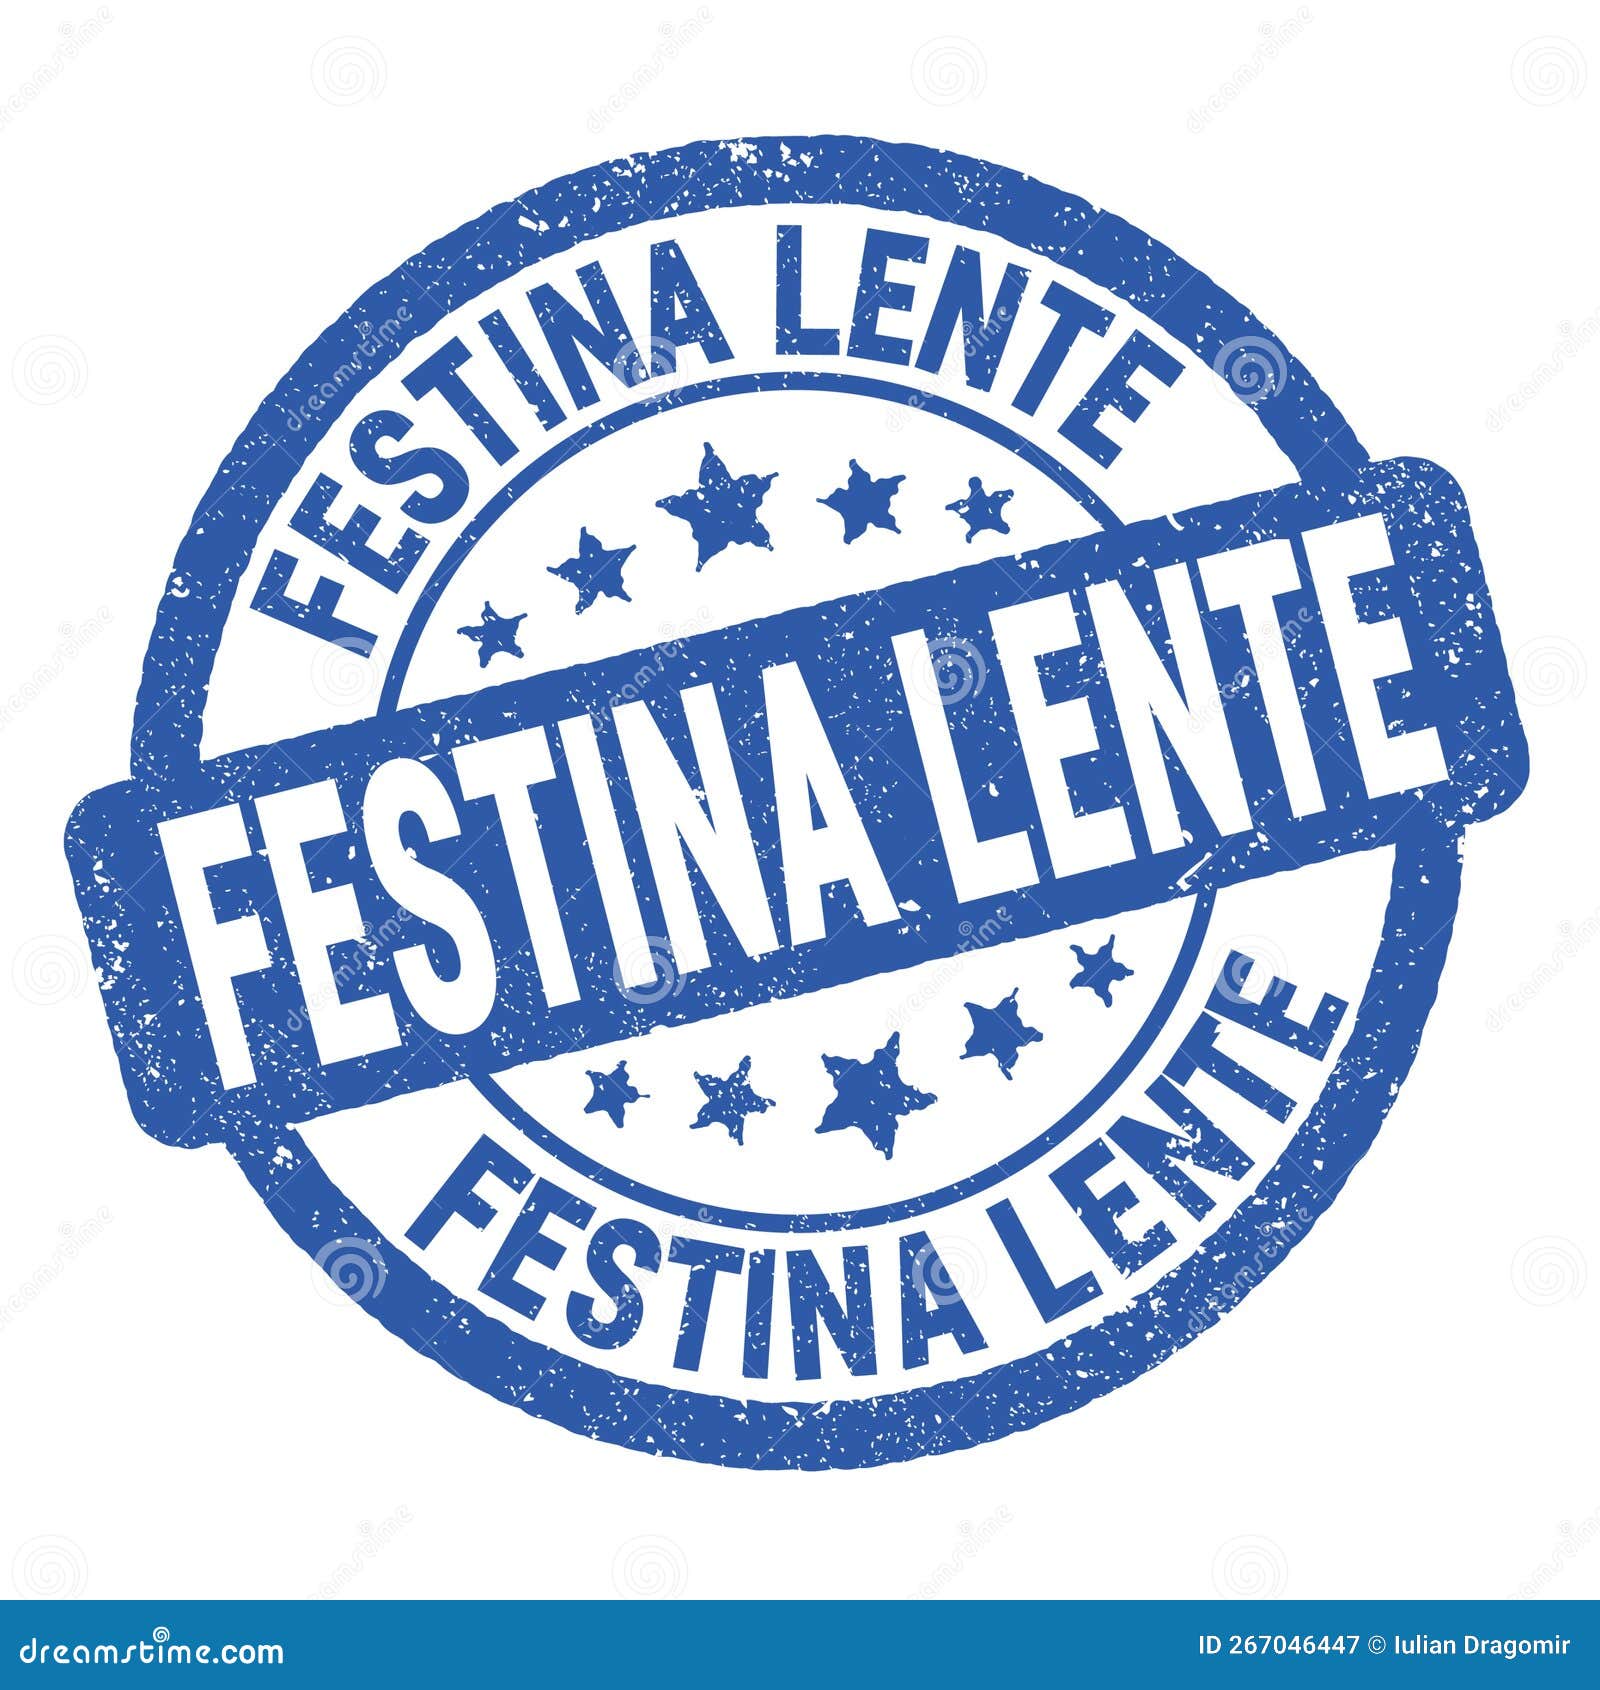 festina lente text written on blue round stamp sign